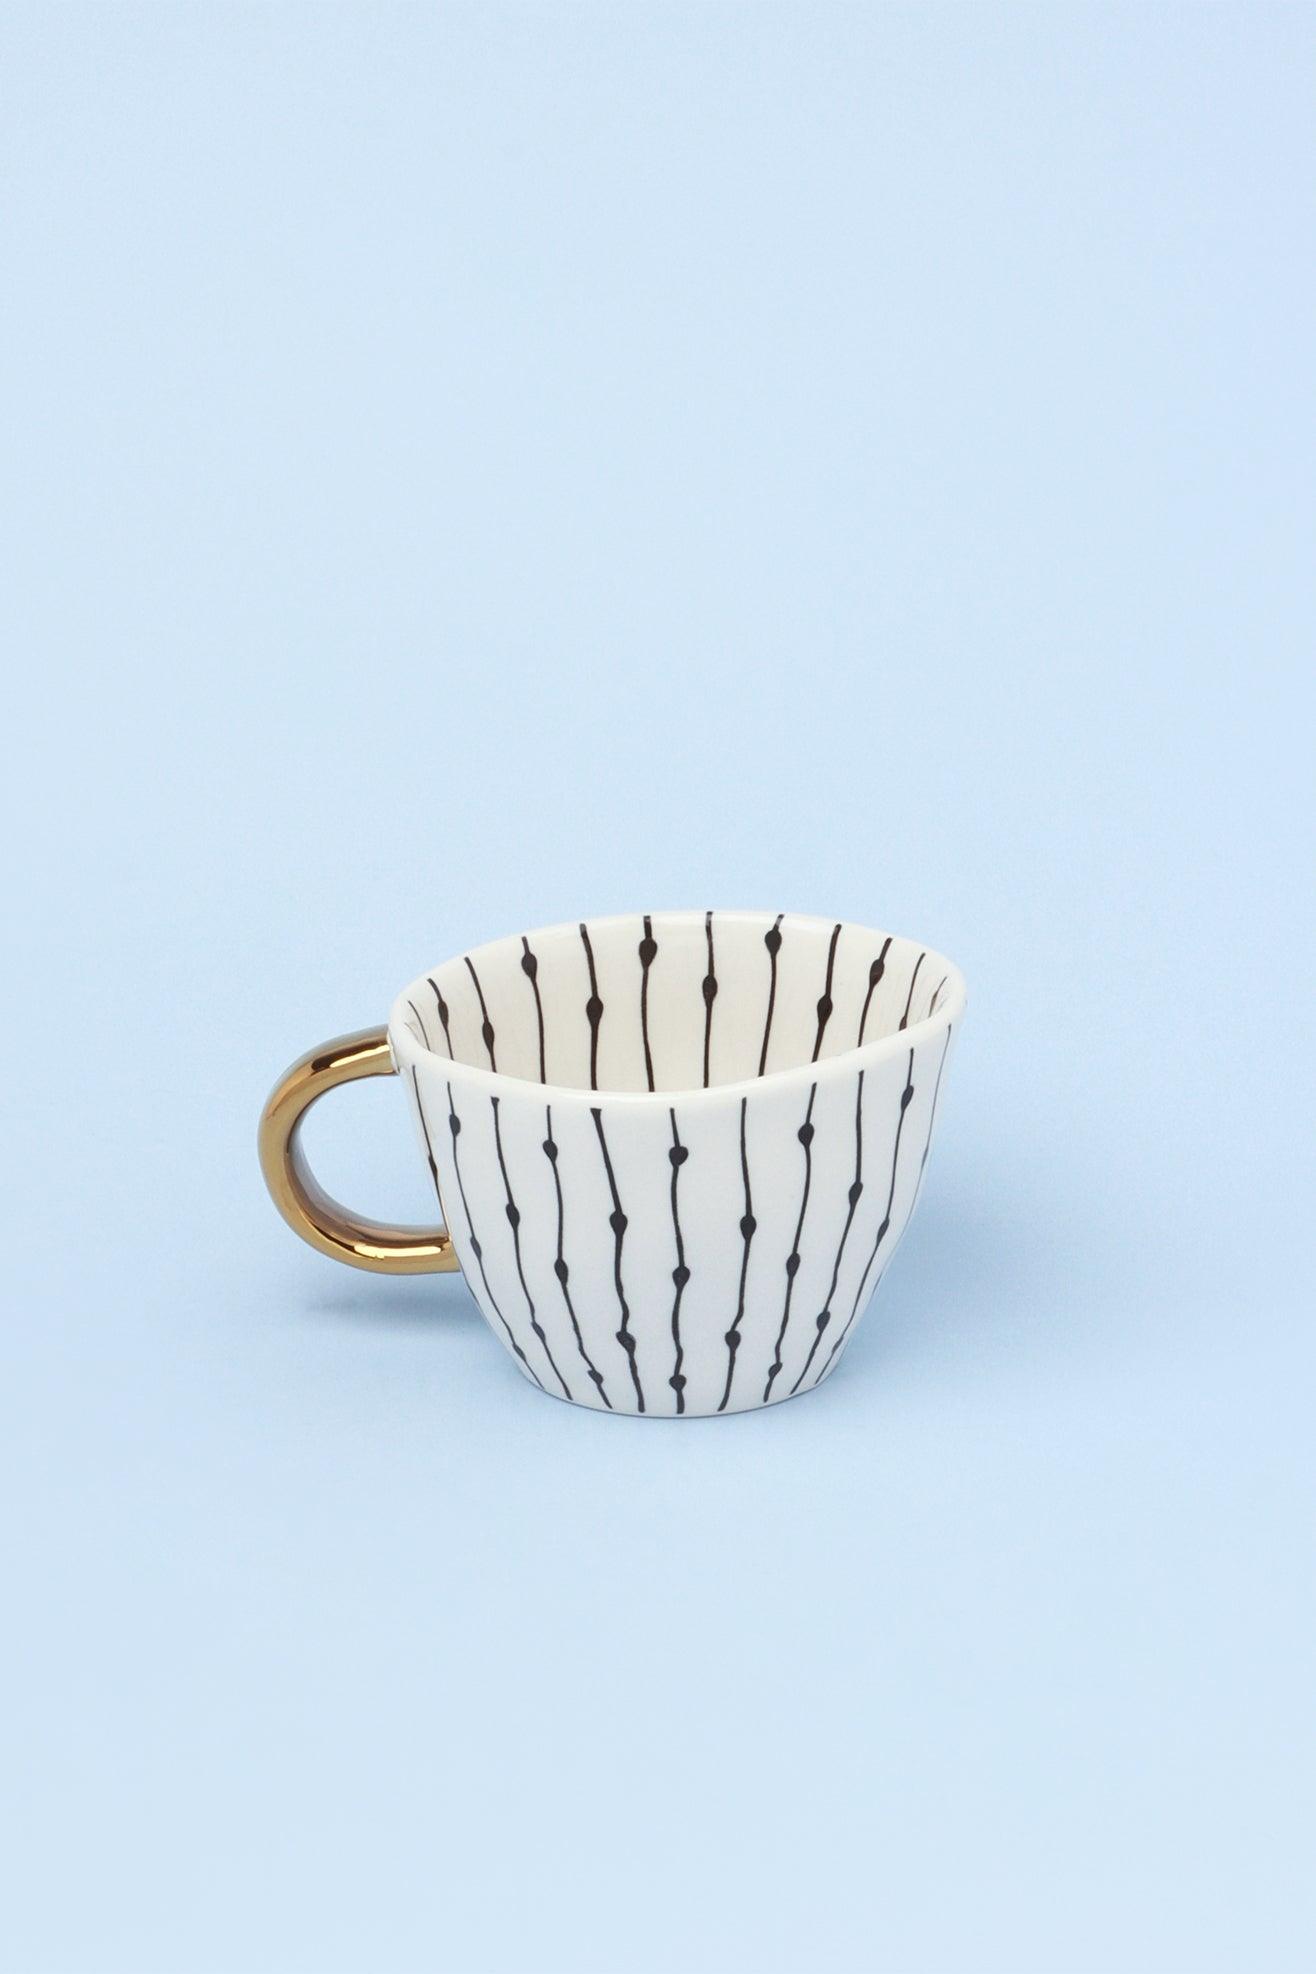 Ventura Glazed Geometric Irregular Thick Ceramic Mug With Gold Handle - G Decor